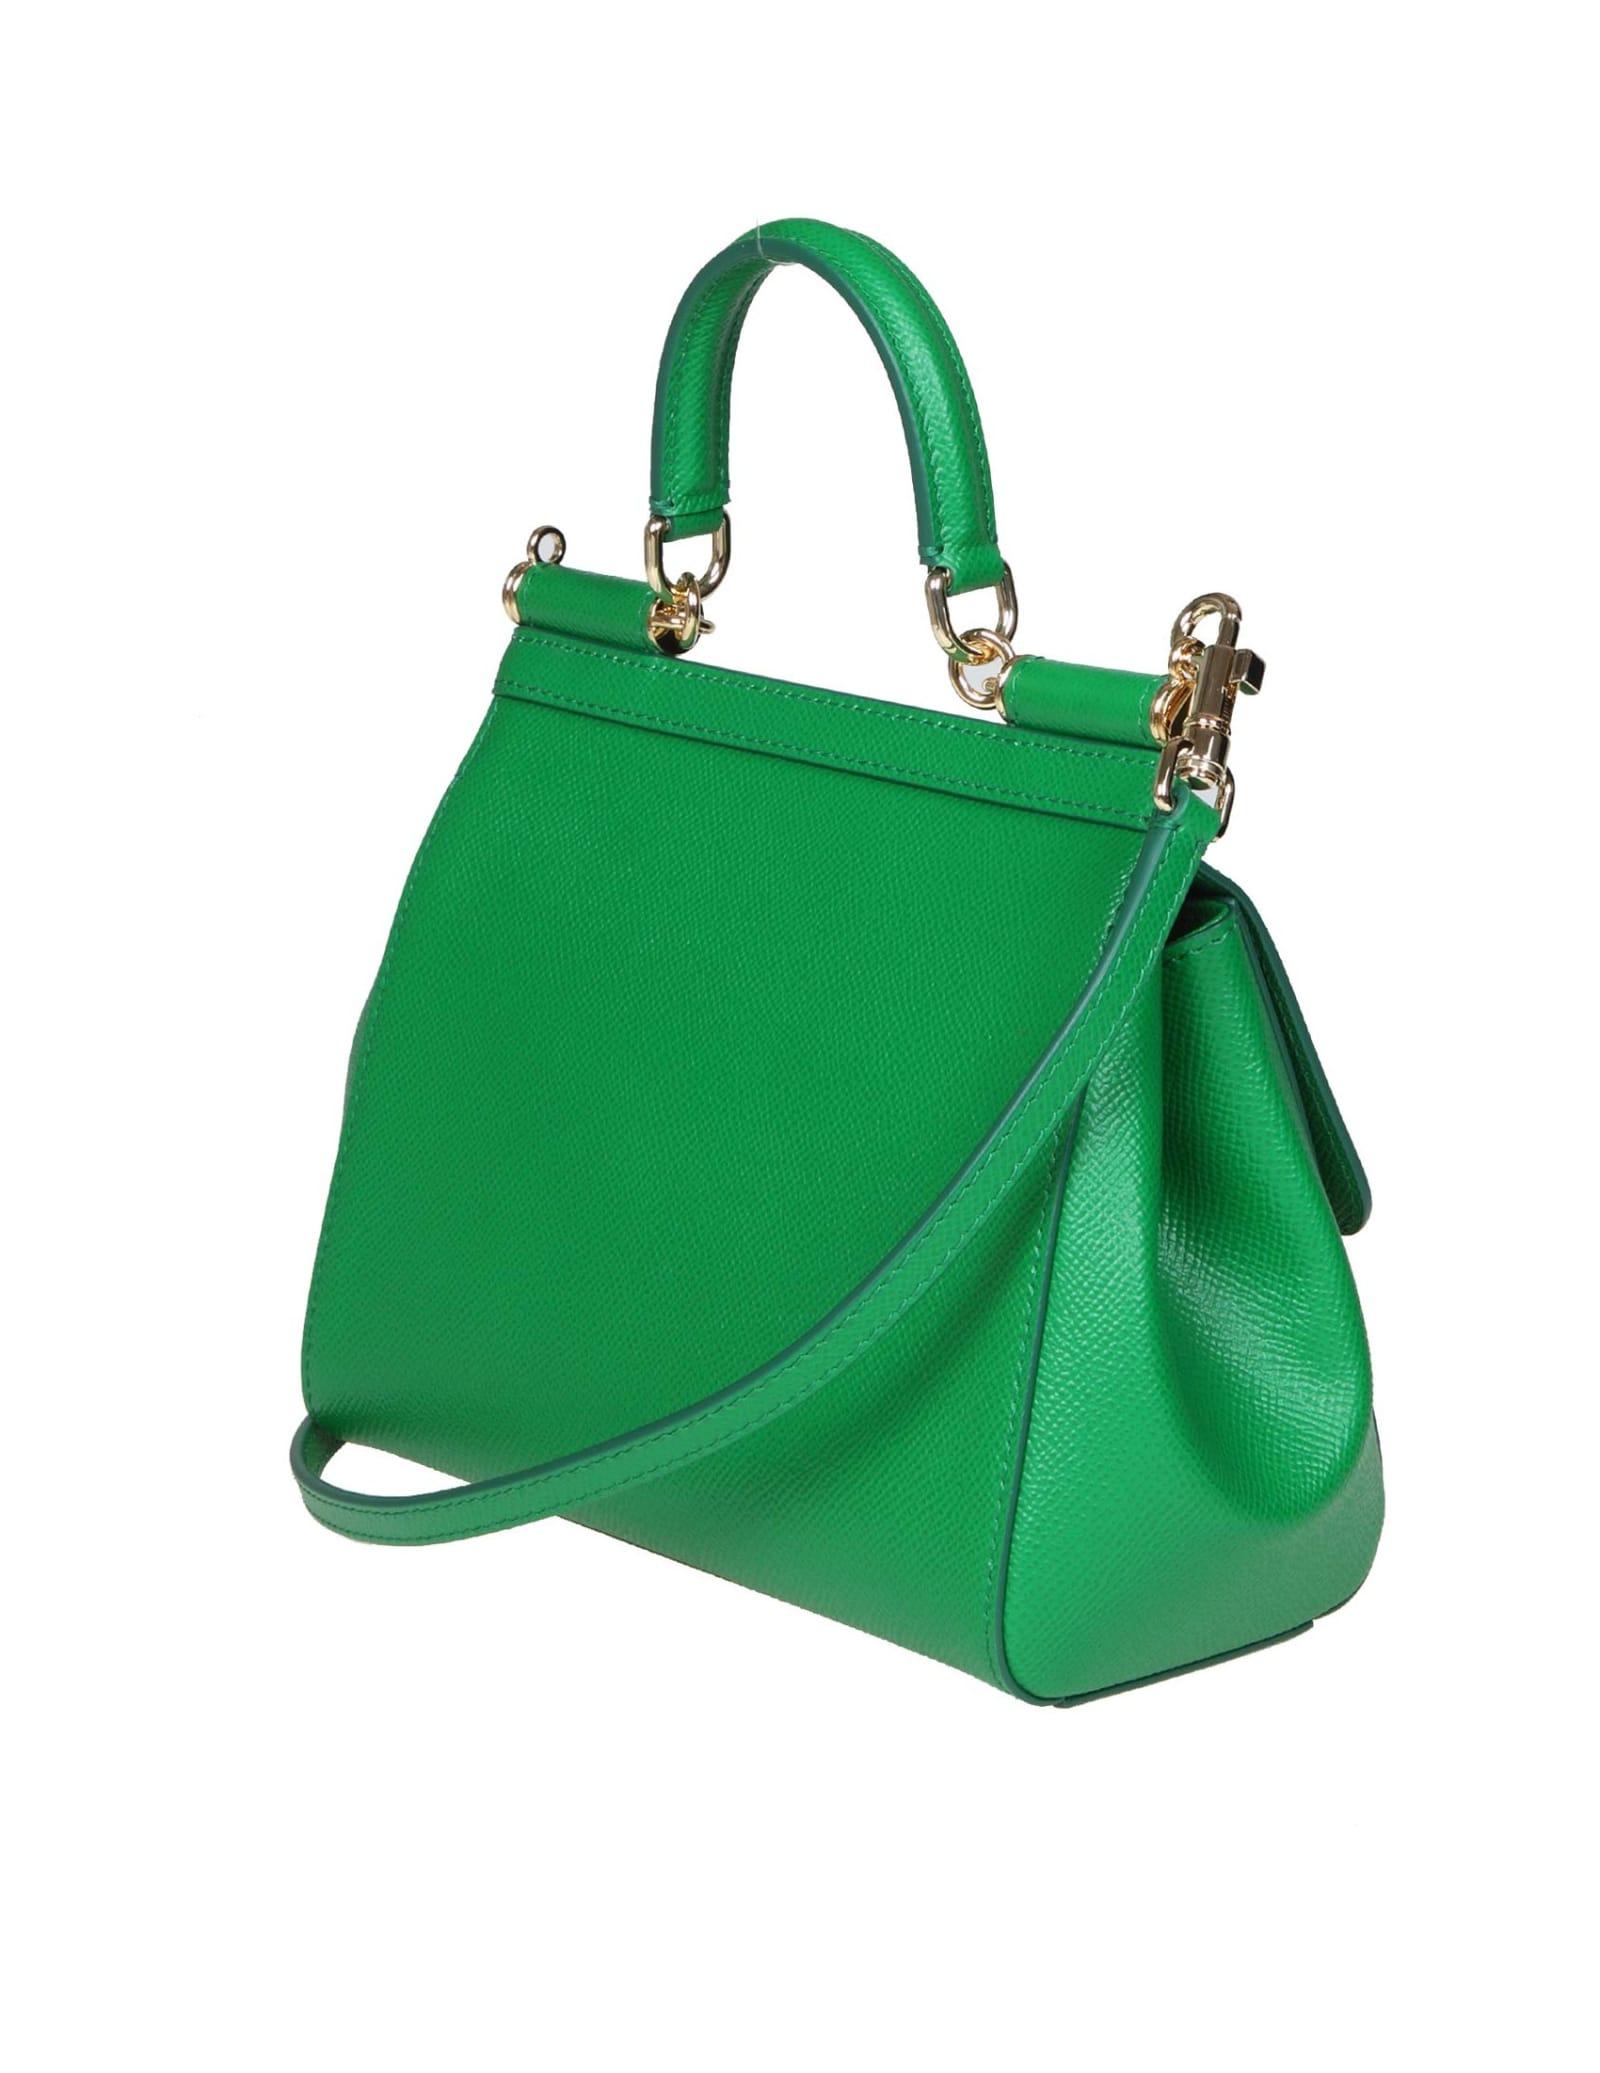 Dolce & Gabbana Small Sicily Bag - Green